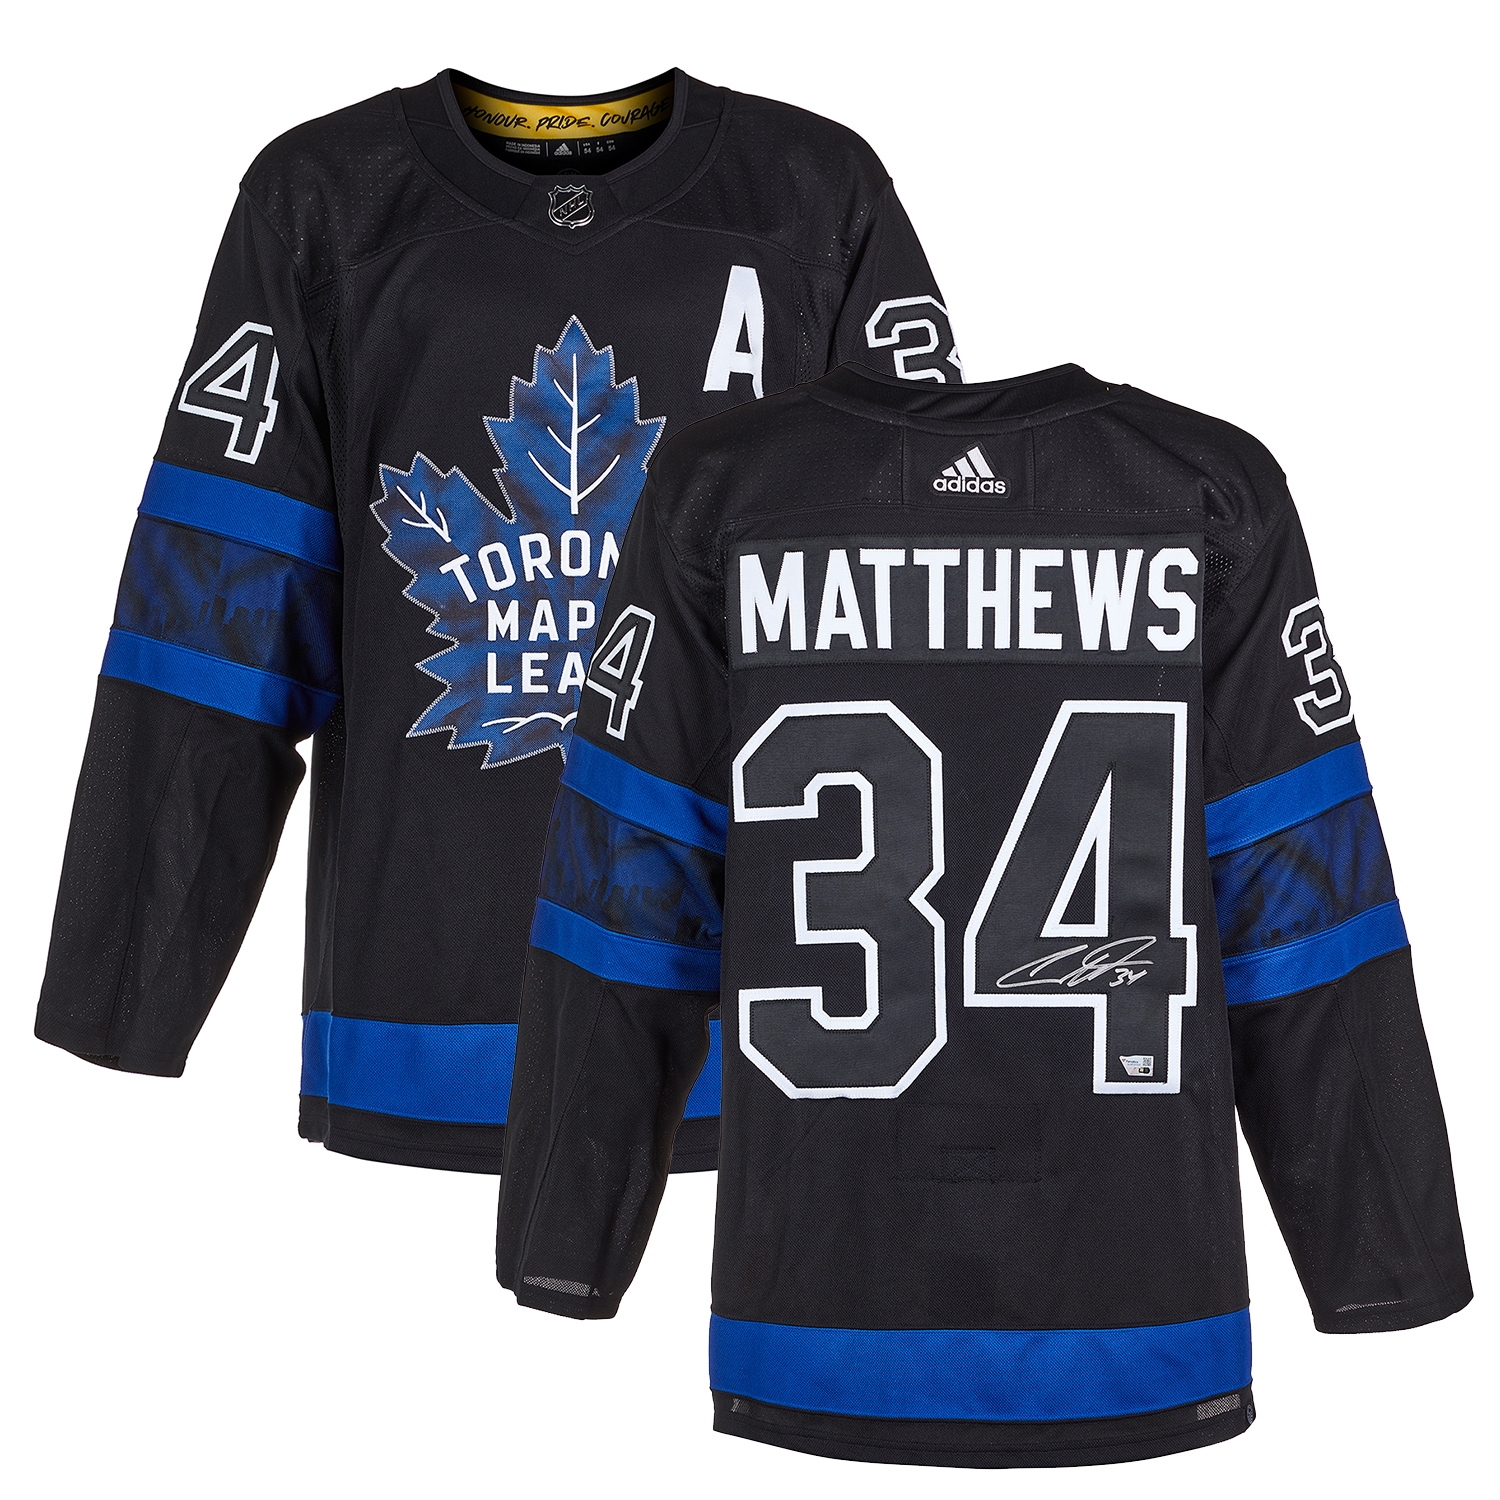 Auston Matthews Signed Toronto Maple Leafs Drew House adidas Jersey